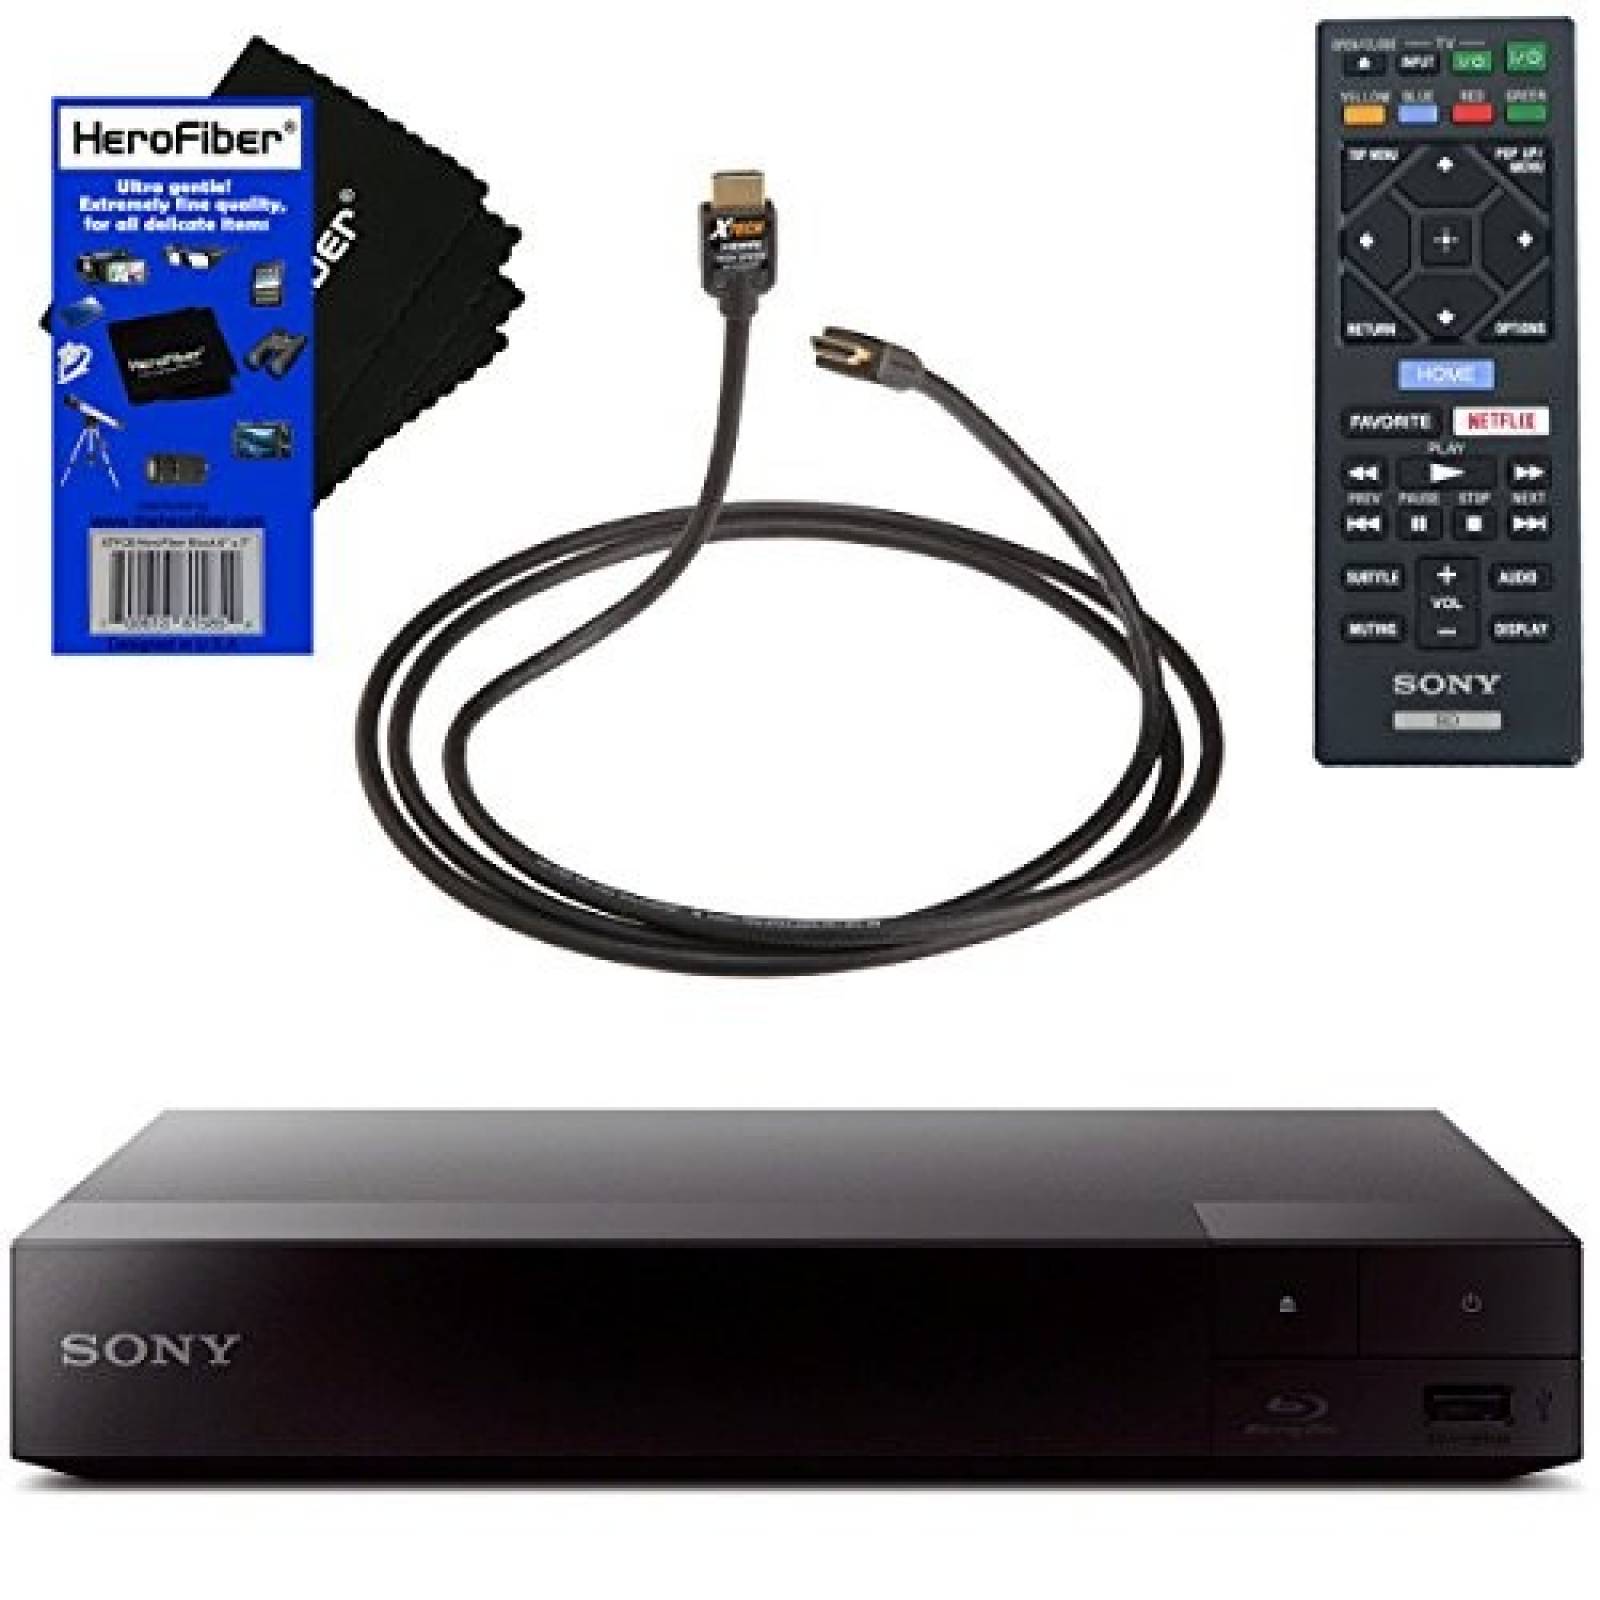 Reproductor de Blu-ray HeroFiber Sony BDP-S3700 con Wi-Fi